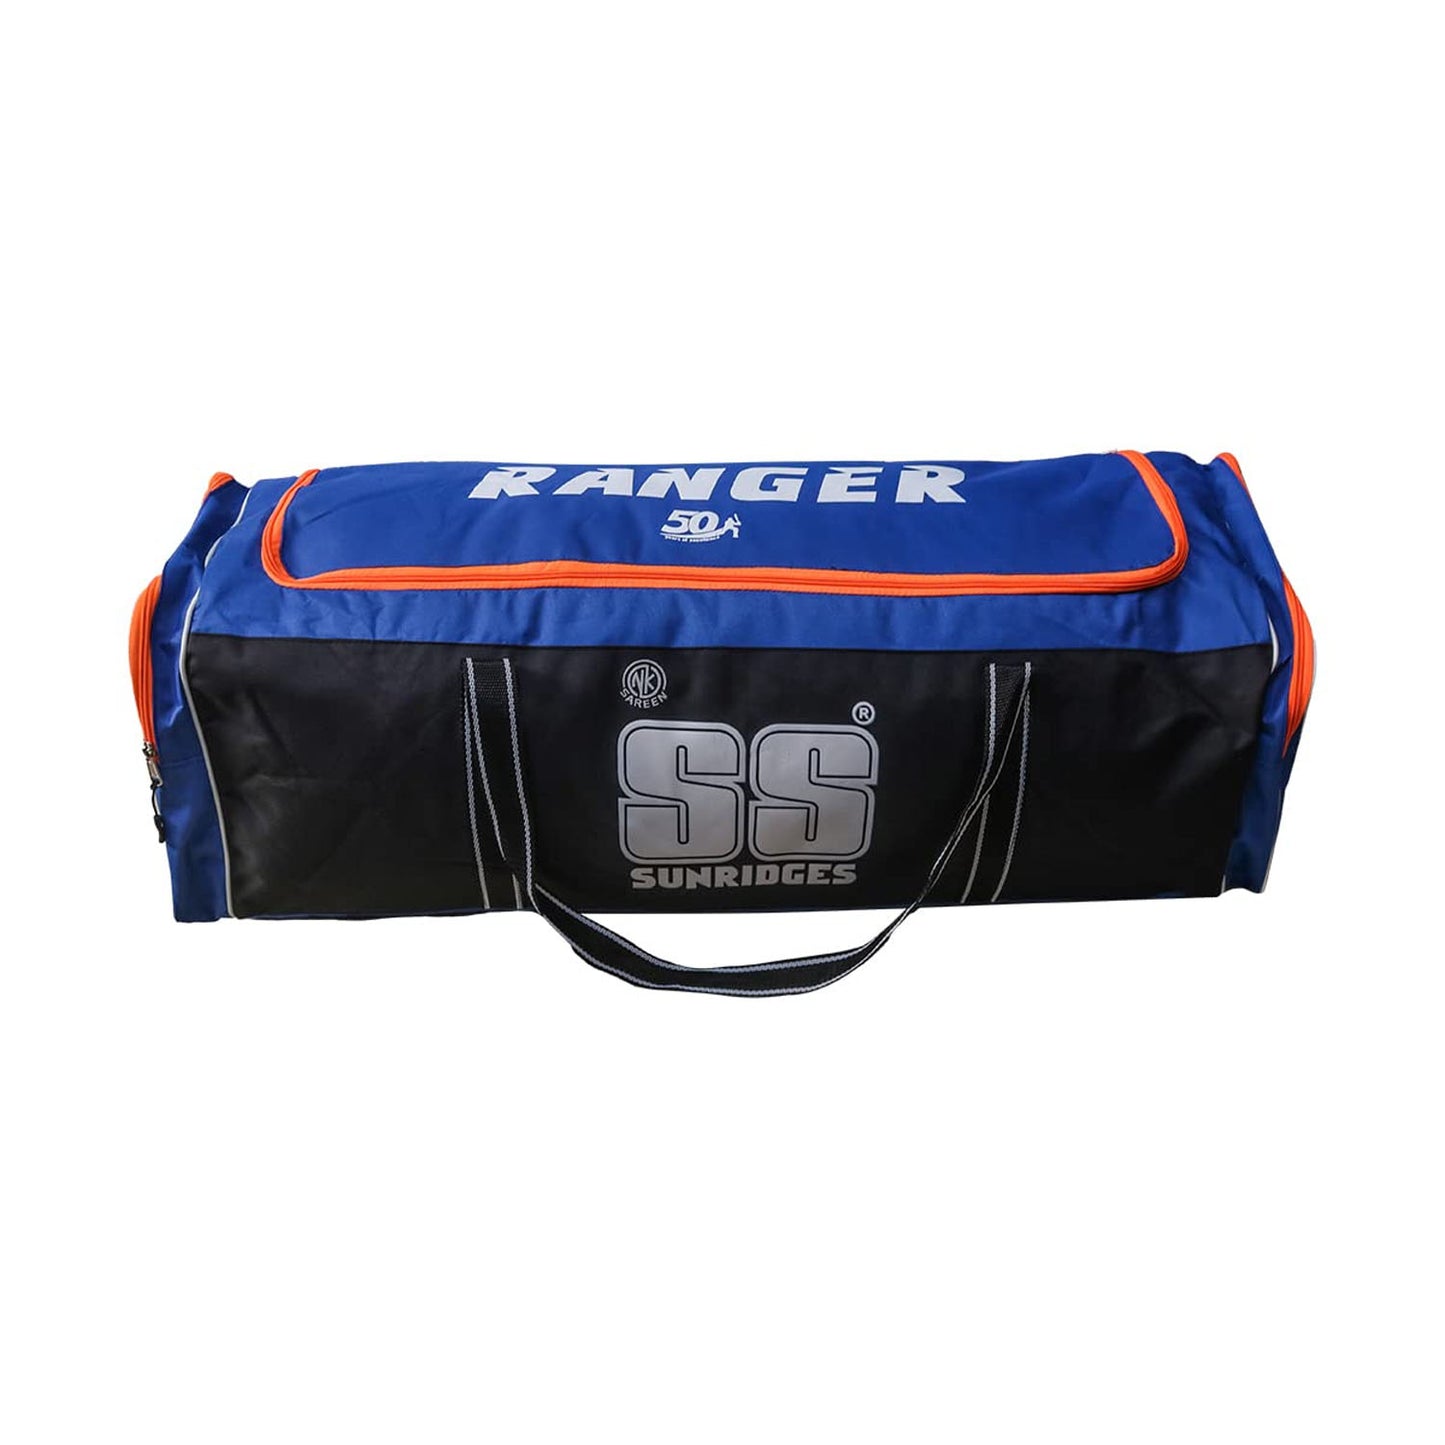 SS Ranger Cricket Kit bag - Best Price online Prokicksports.com